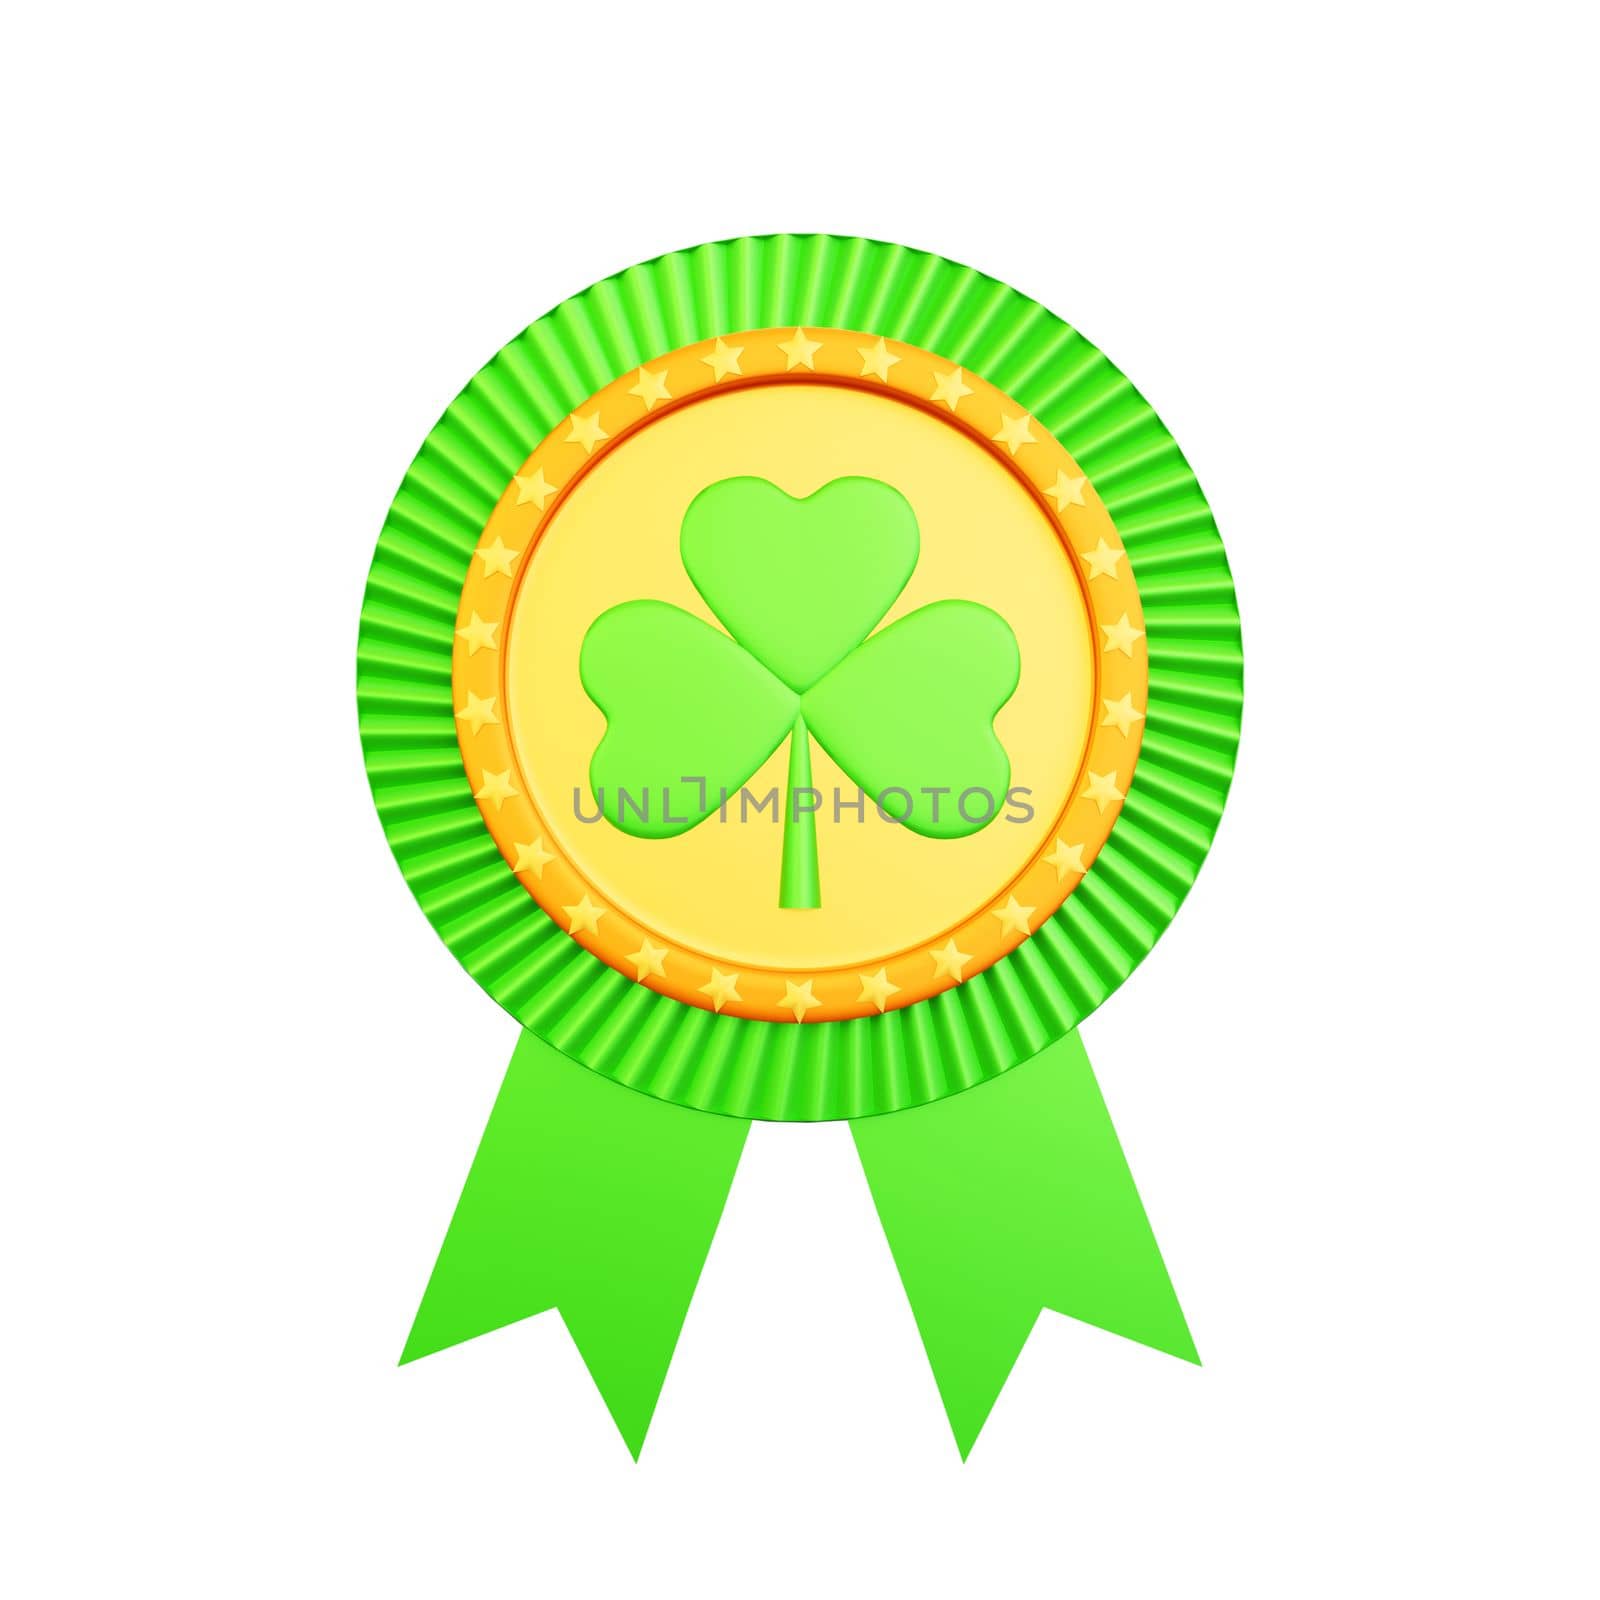 3d rendering of st patrick day award clover green ribbon icon by Rahmat_Djayusman